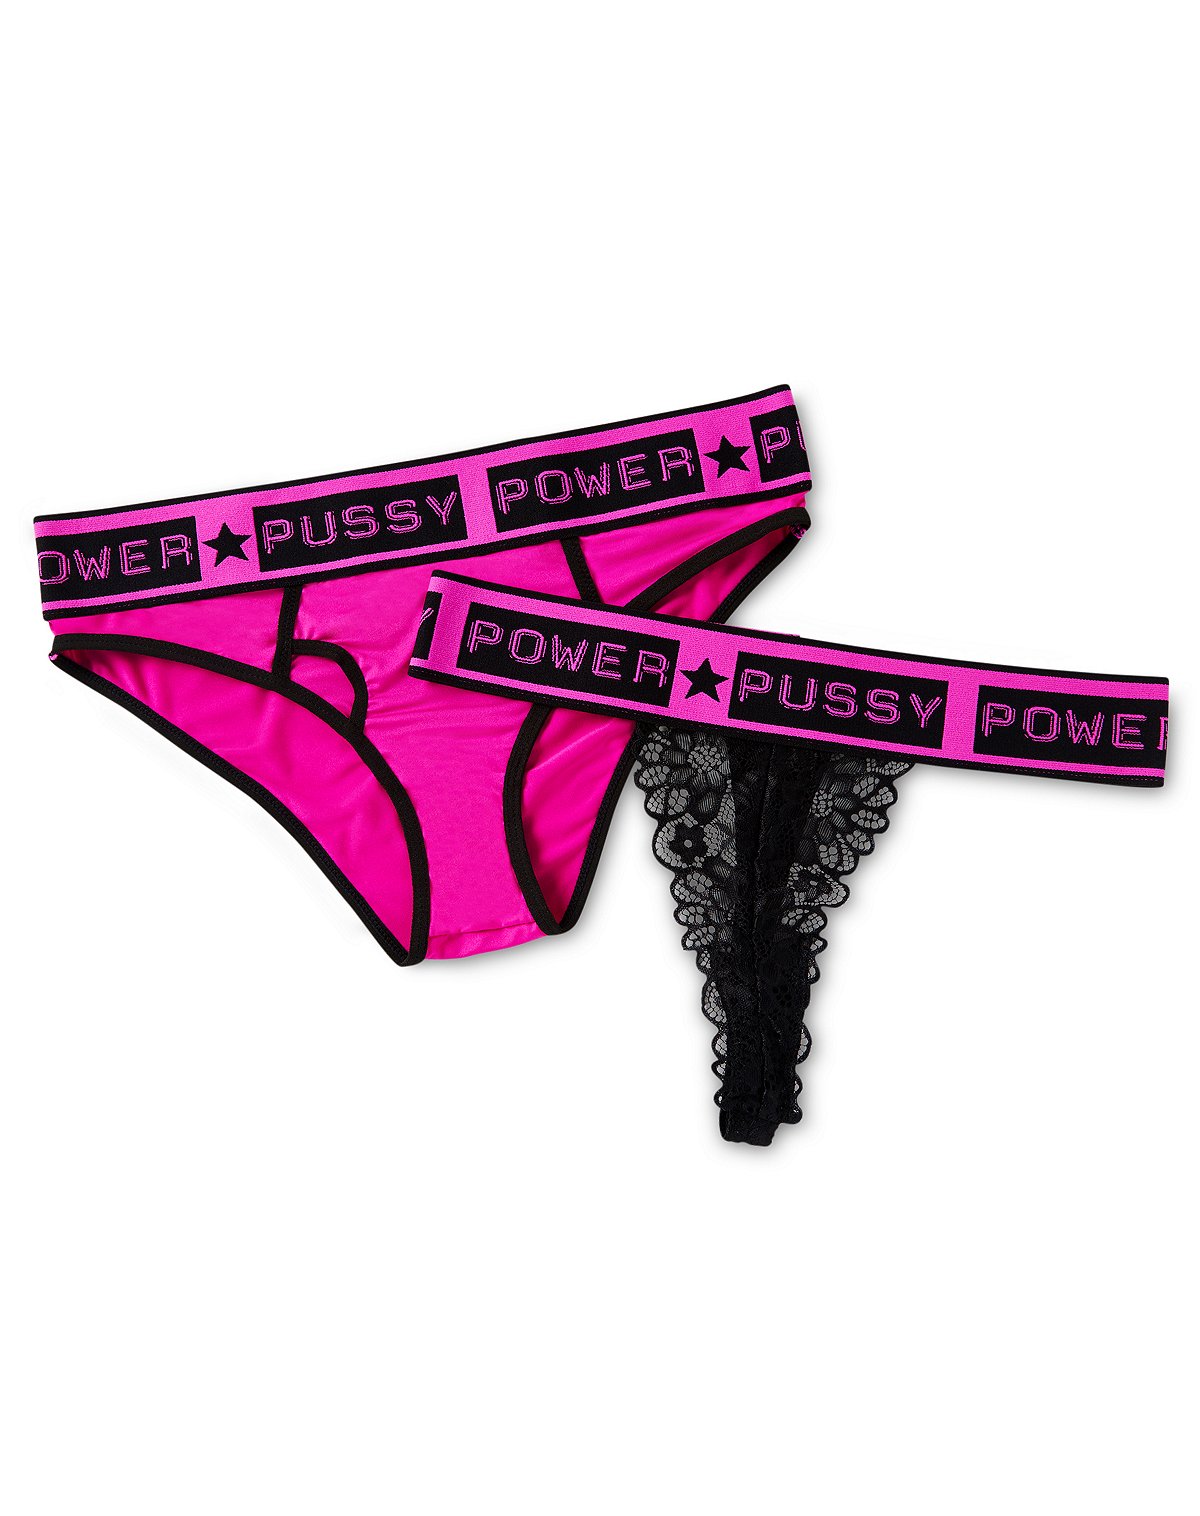 Pussy Power Thong Panties 2 Pack